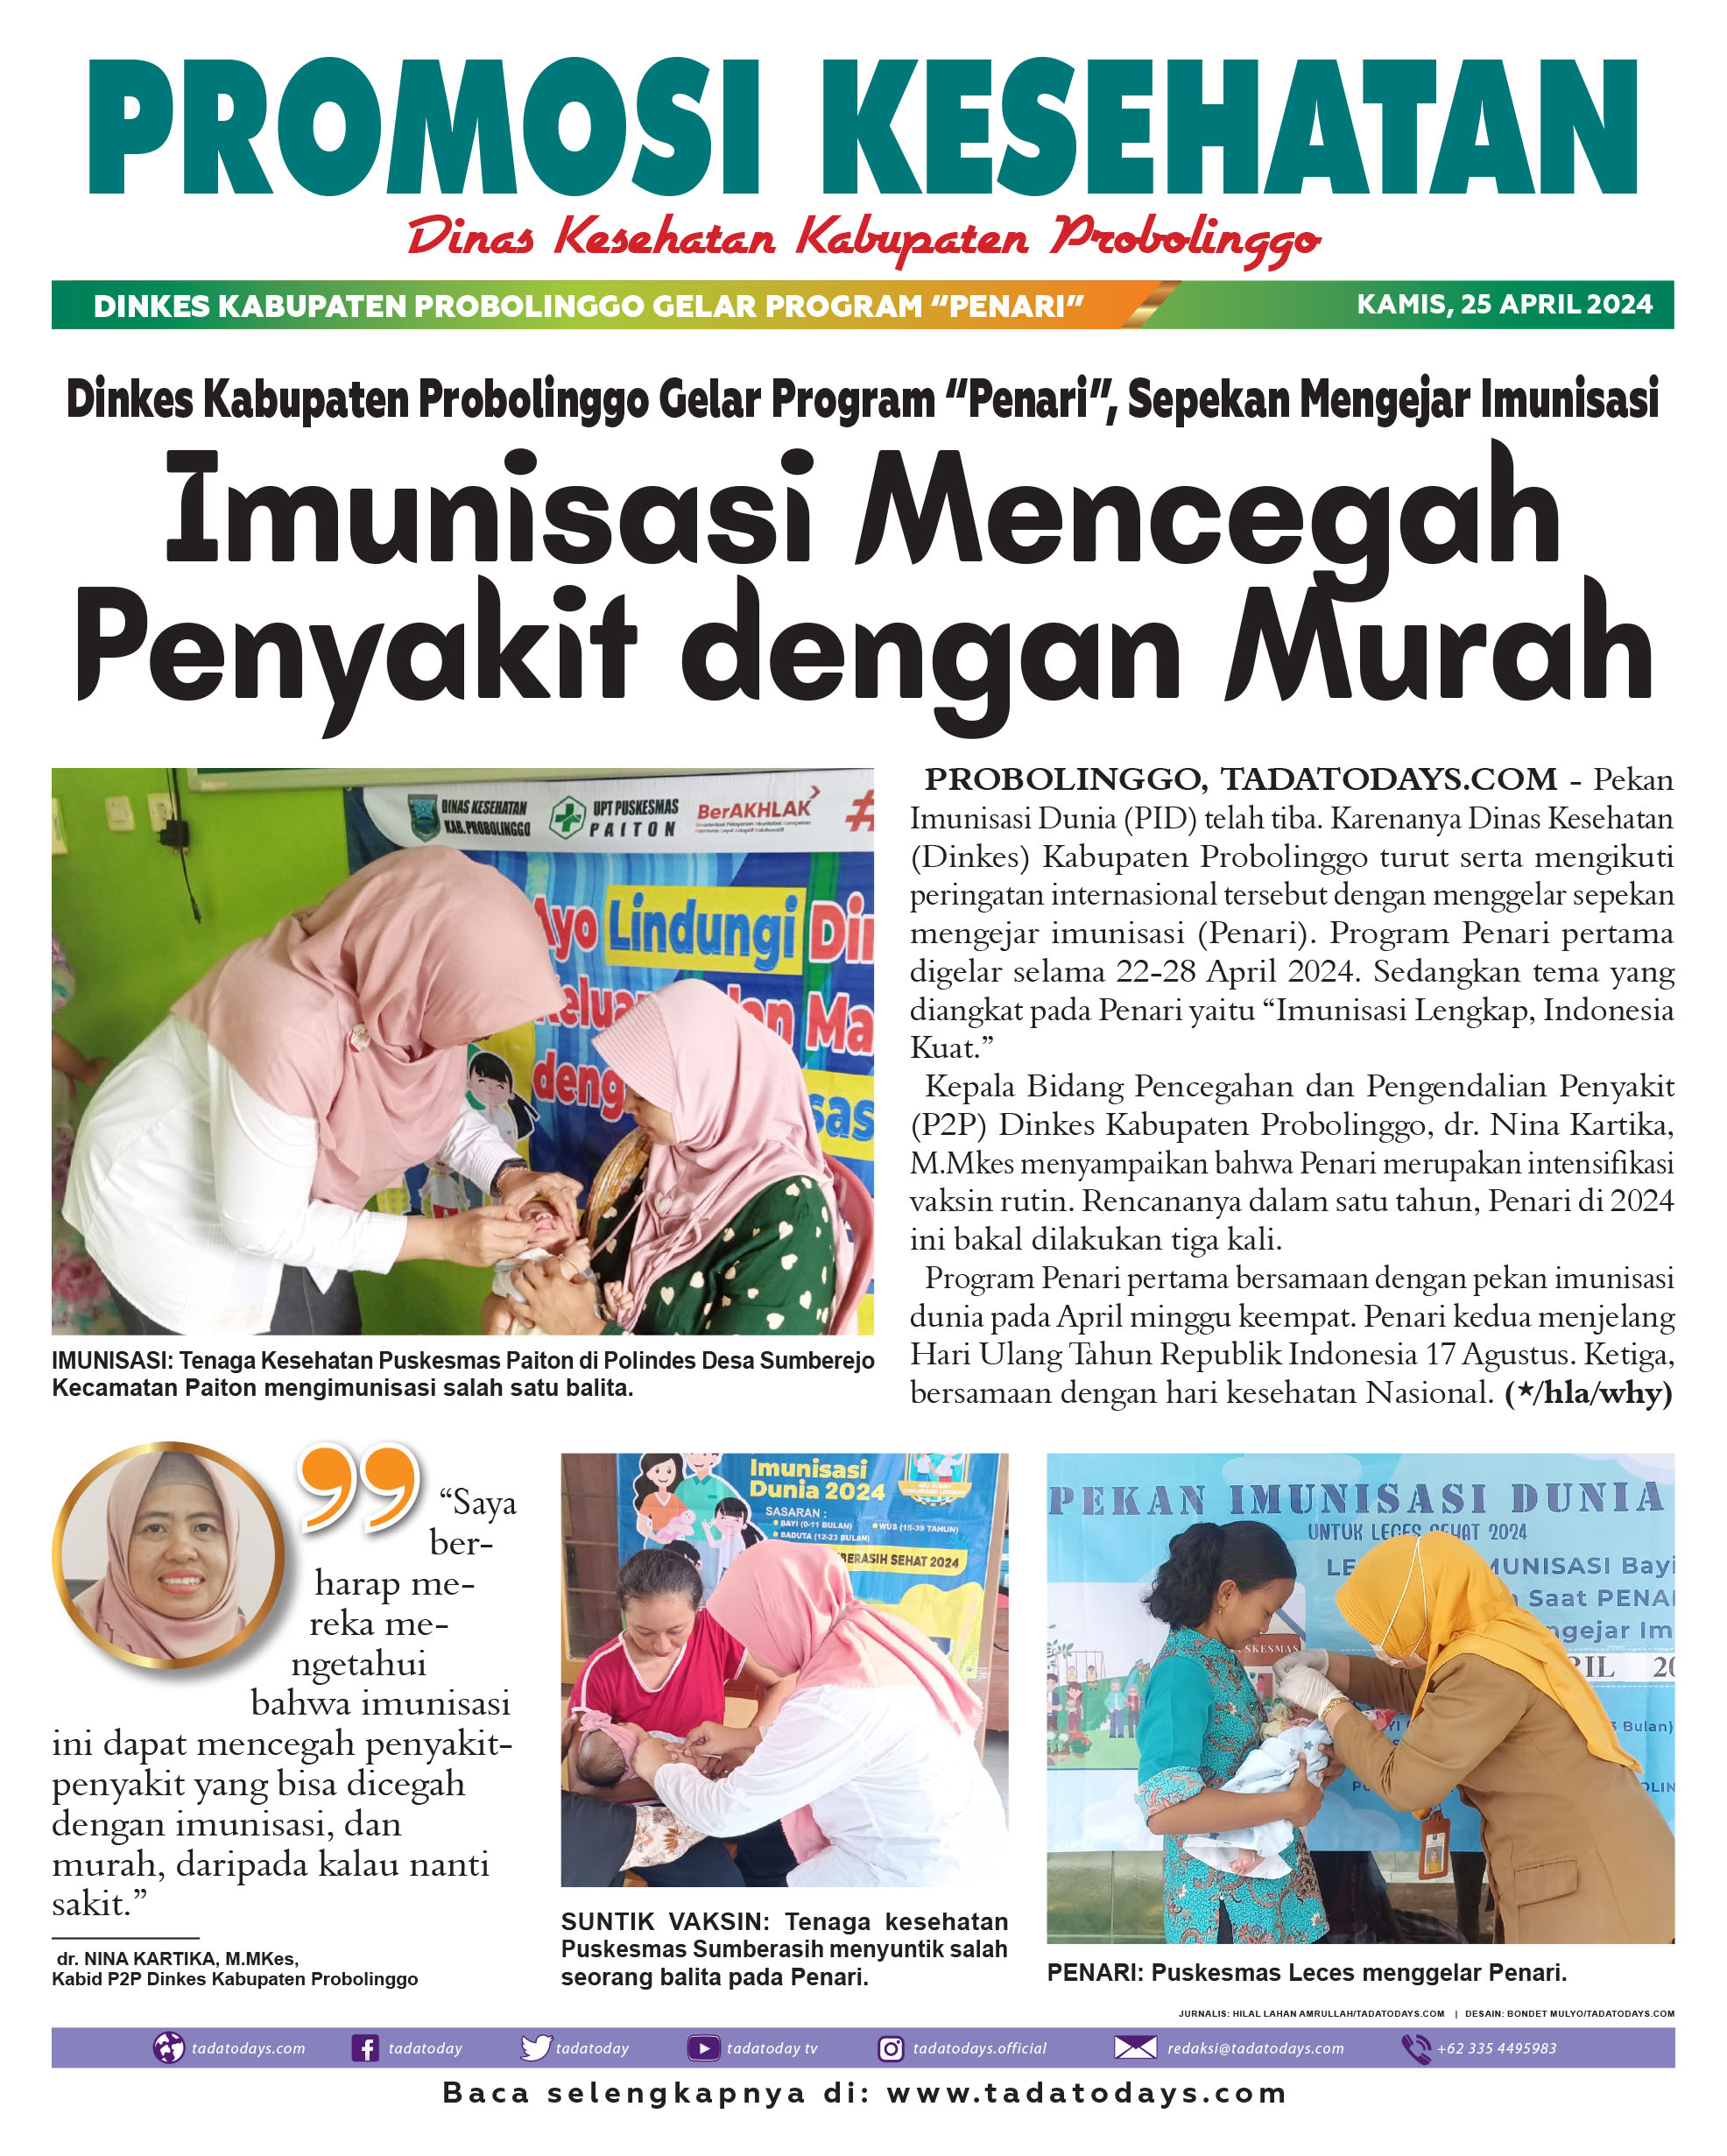 Dinkes Kabupaten Probolinggo Menggelar Program “Penari”, Sepekan Mengejar Imunisasi